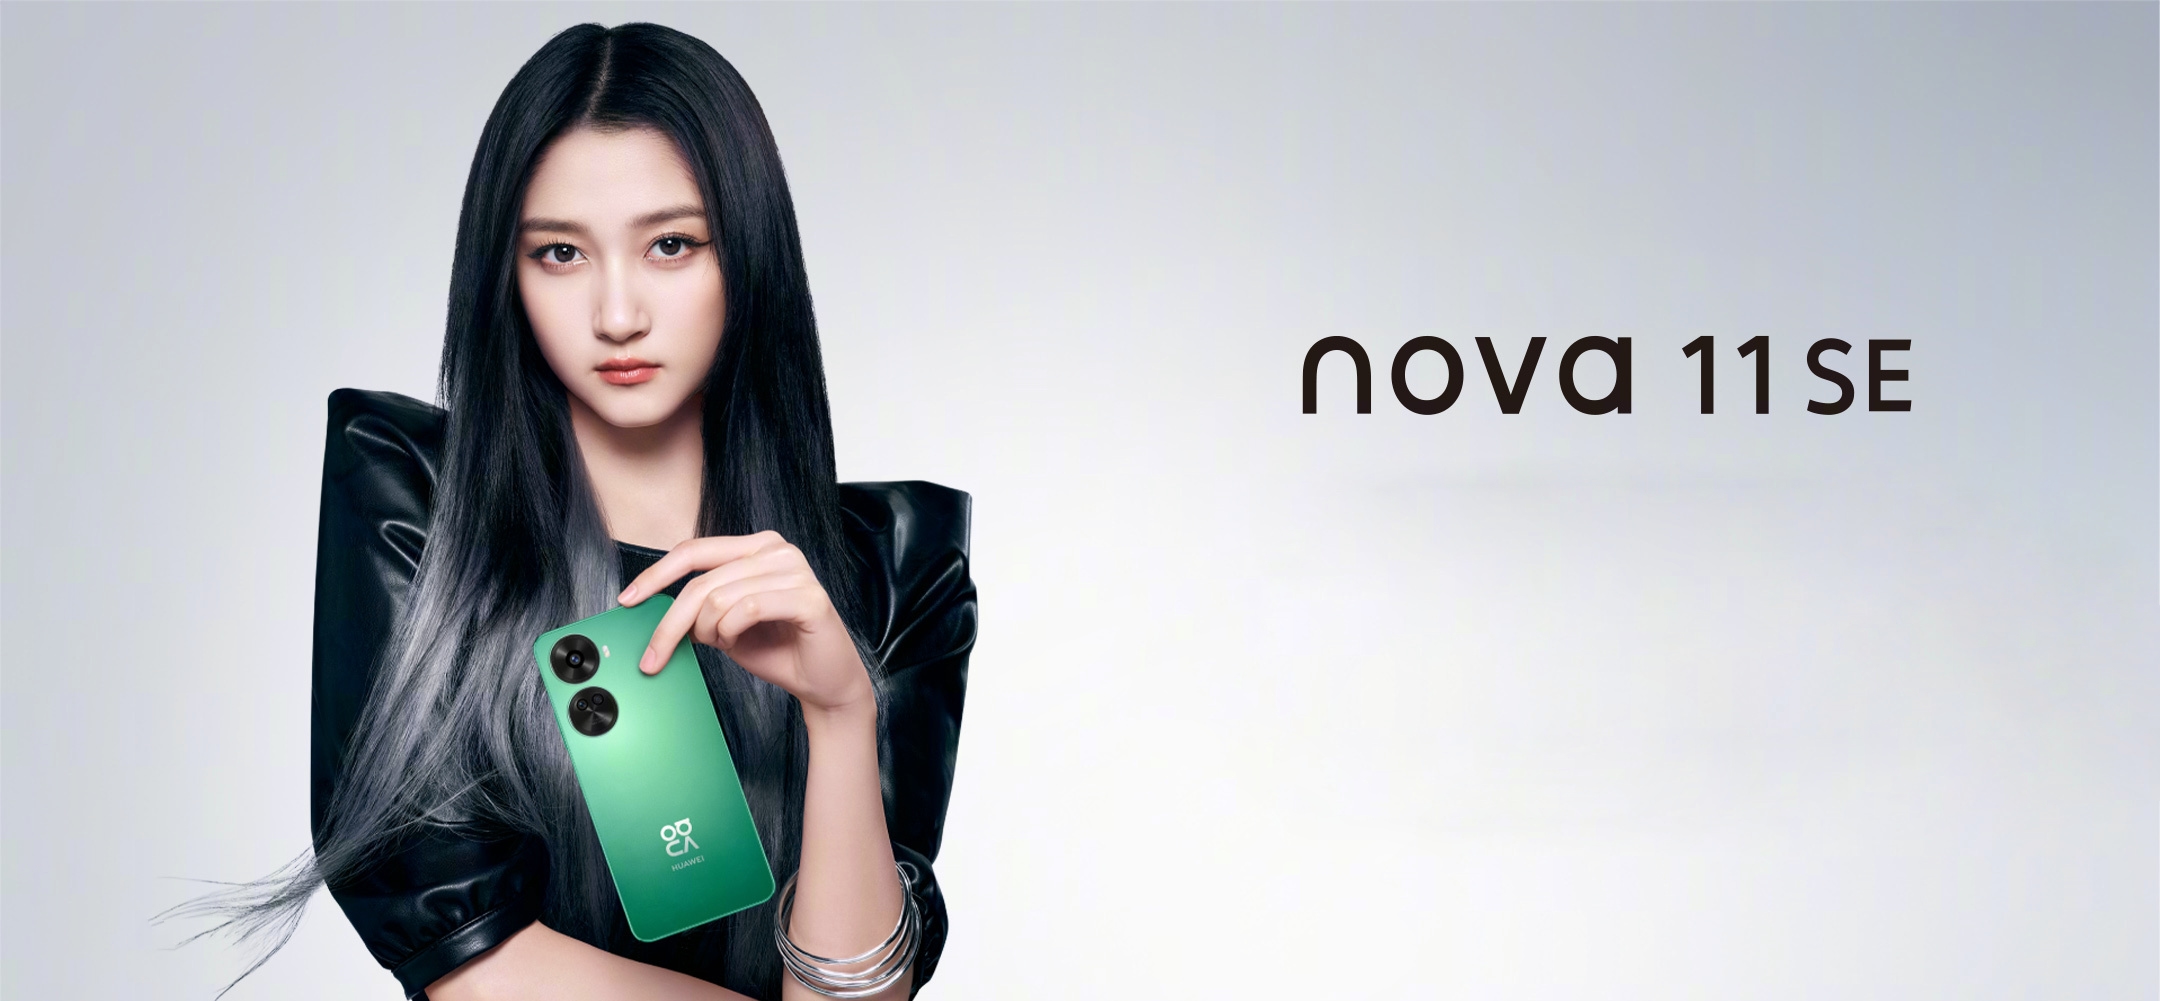 Huawei Nova 11 SE: 90Hz OLED display, Snapdragon 680 chip and 108 MP camera for $275